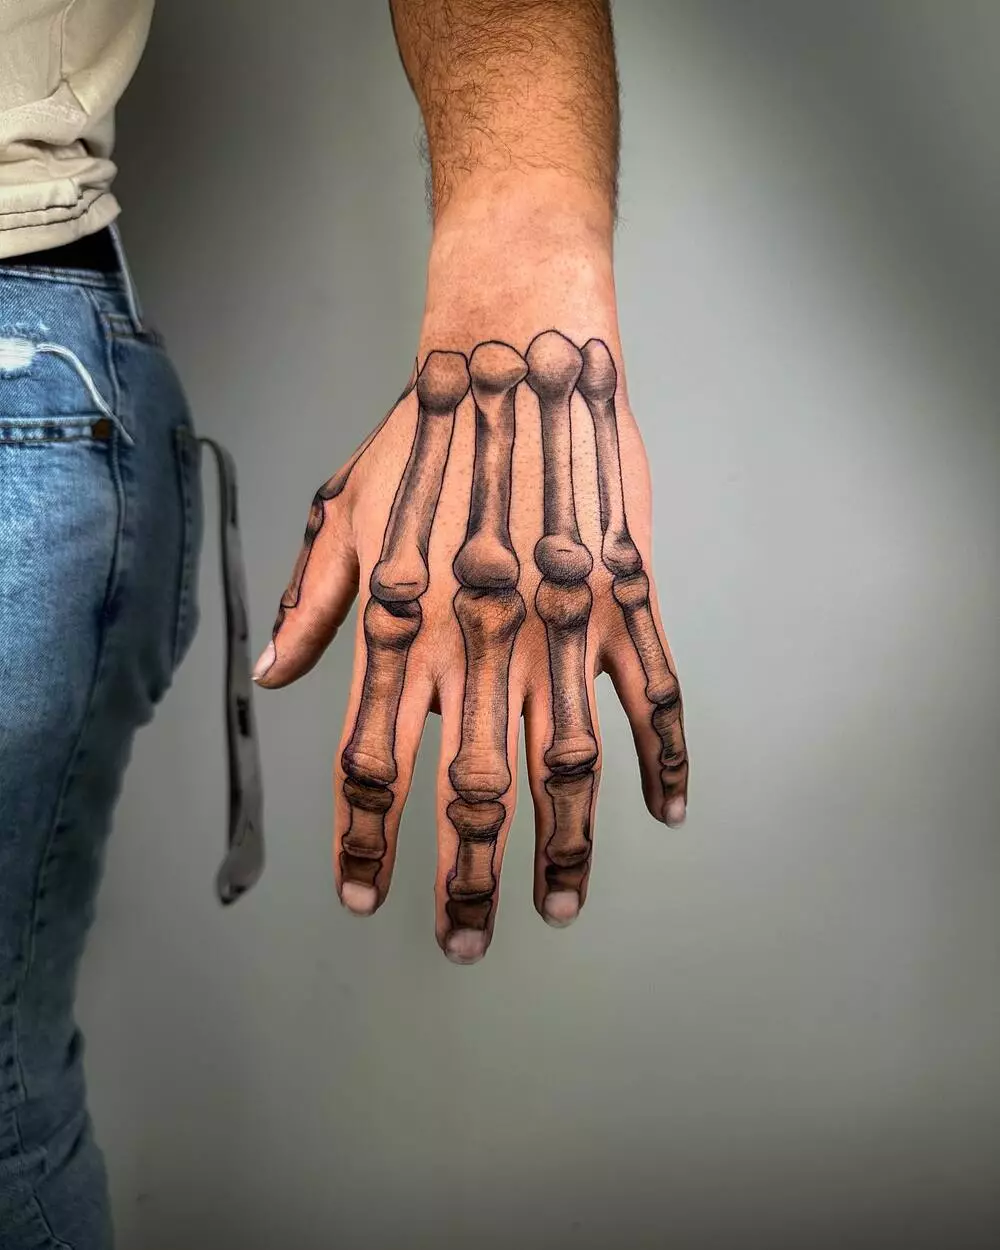 One More Example of Skeleton Bone Hand Realism Tattoo